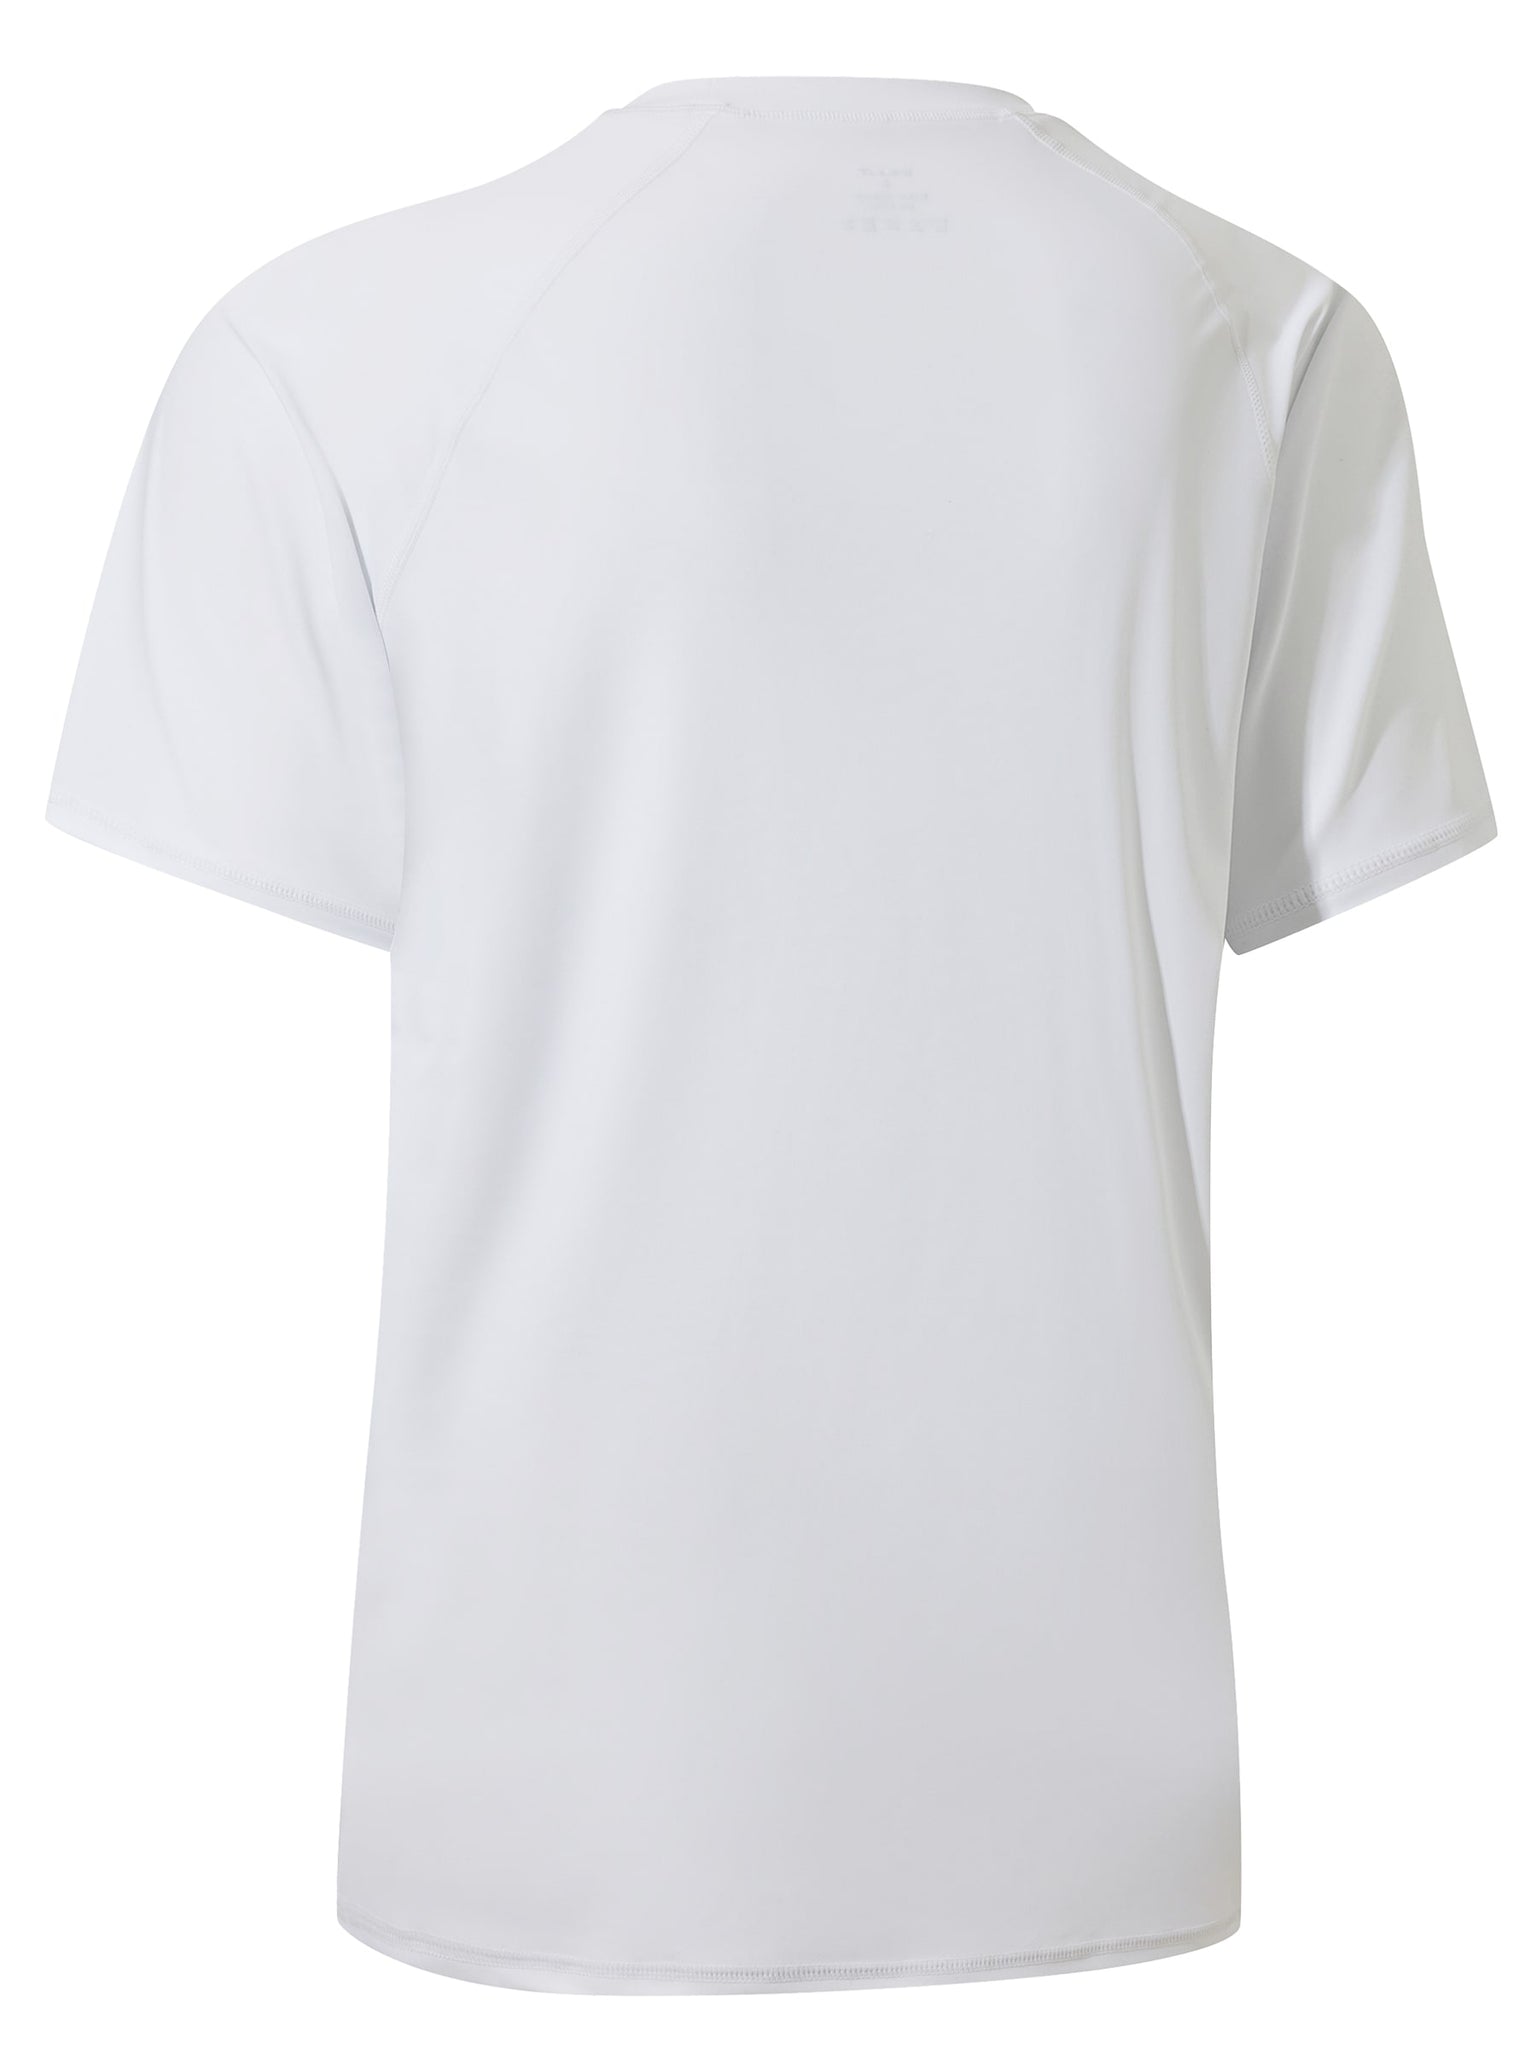 Men's Sun Protection Short Sleeve Shirt_White_laydown2